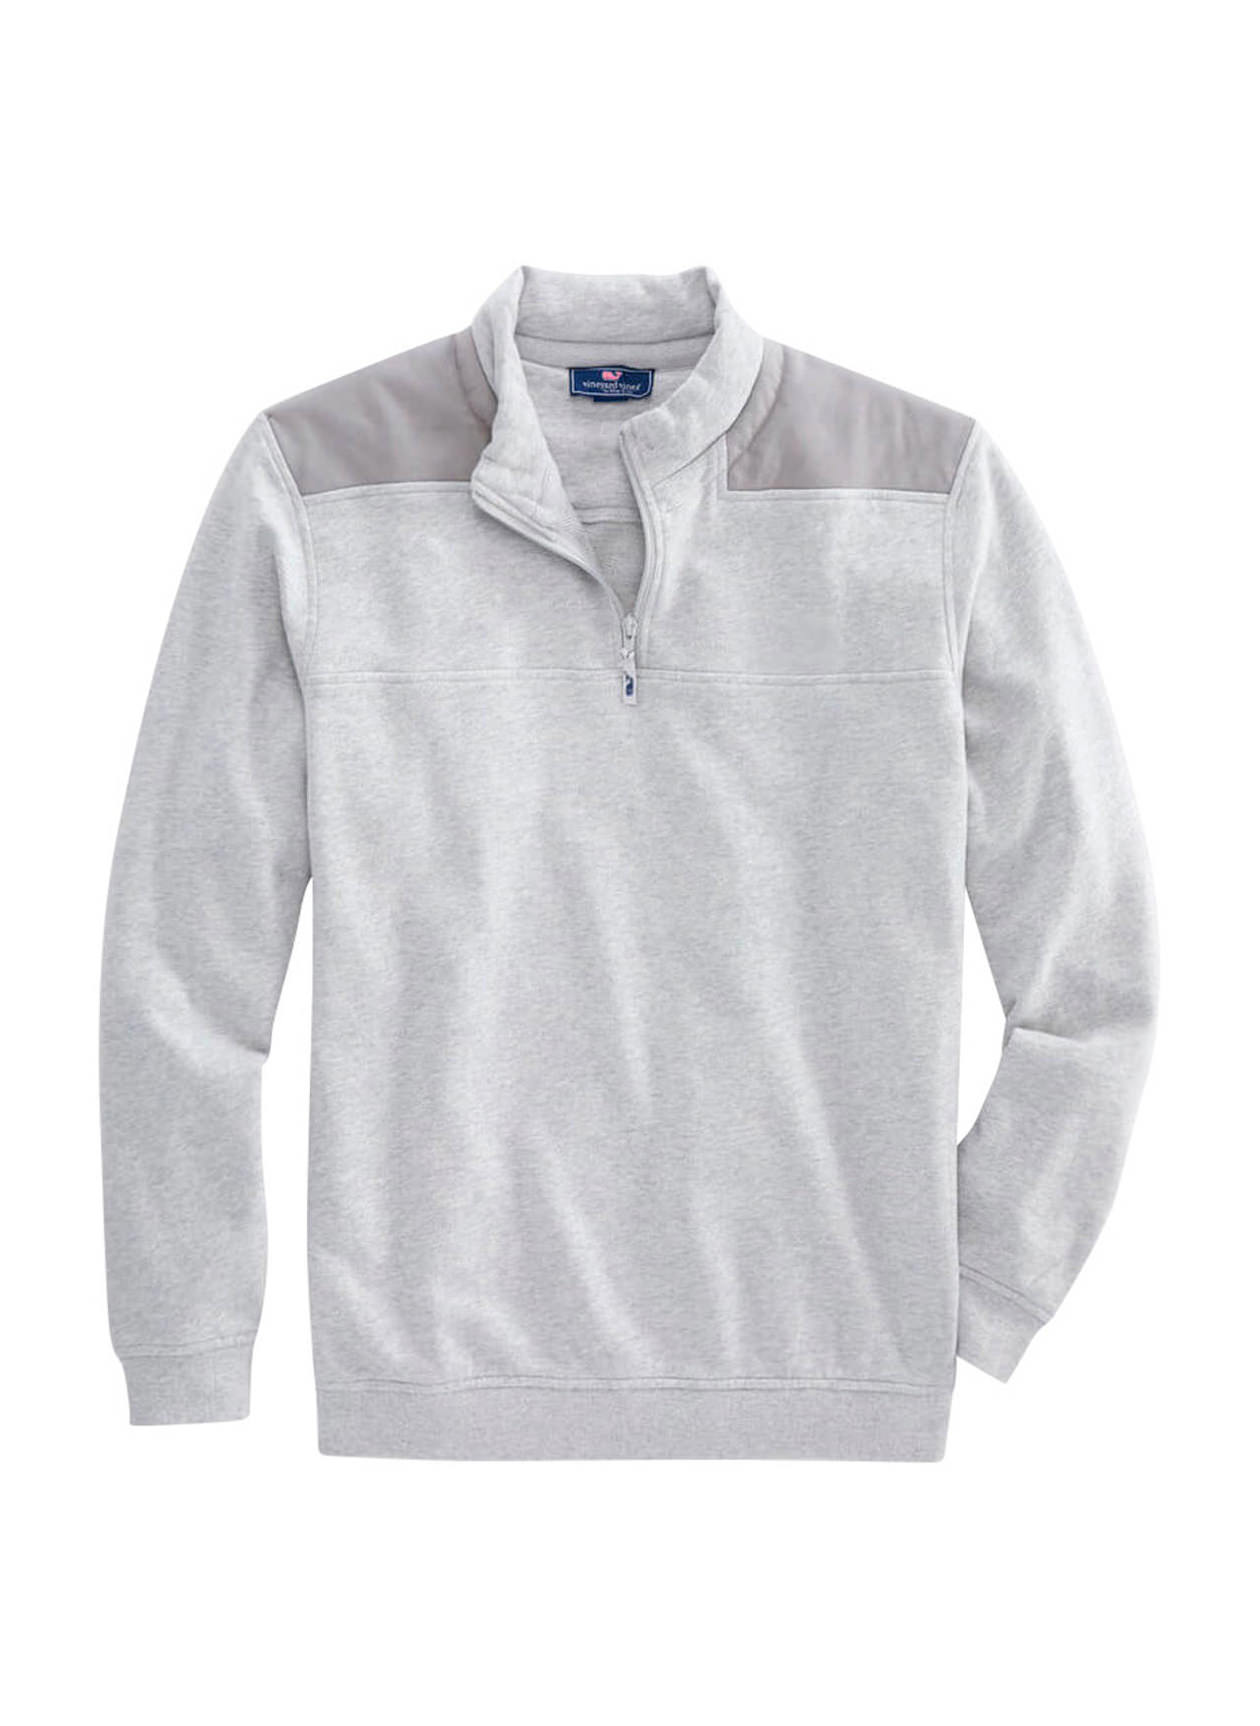 Men's Vineyard Vines Heather Gray Dallas Cowboys Shep Shirt Quarter-Zip Sweatshirt Size: Large